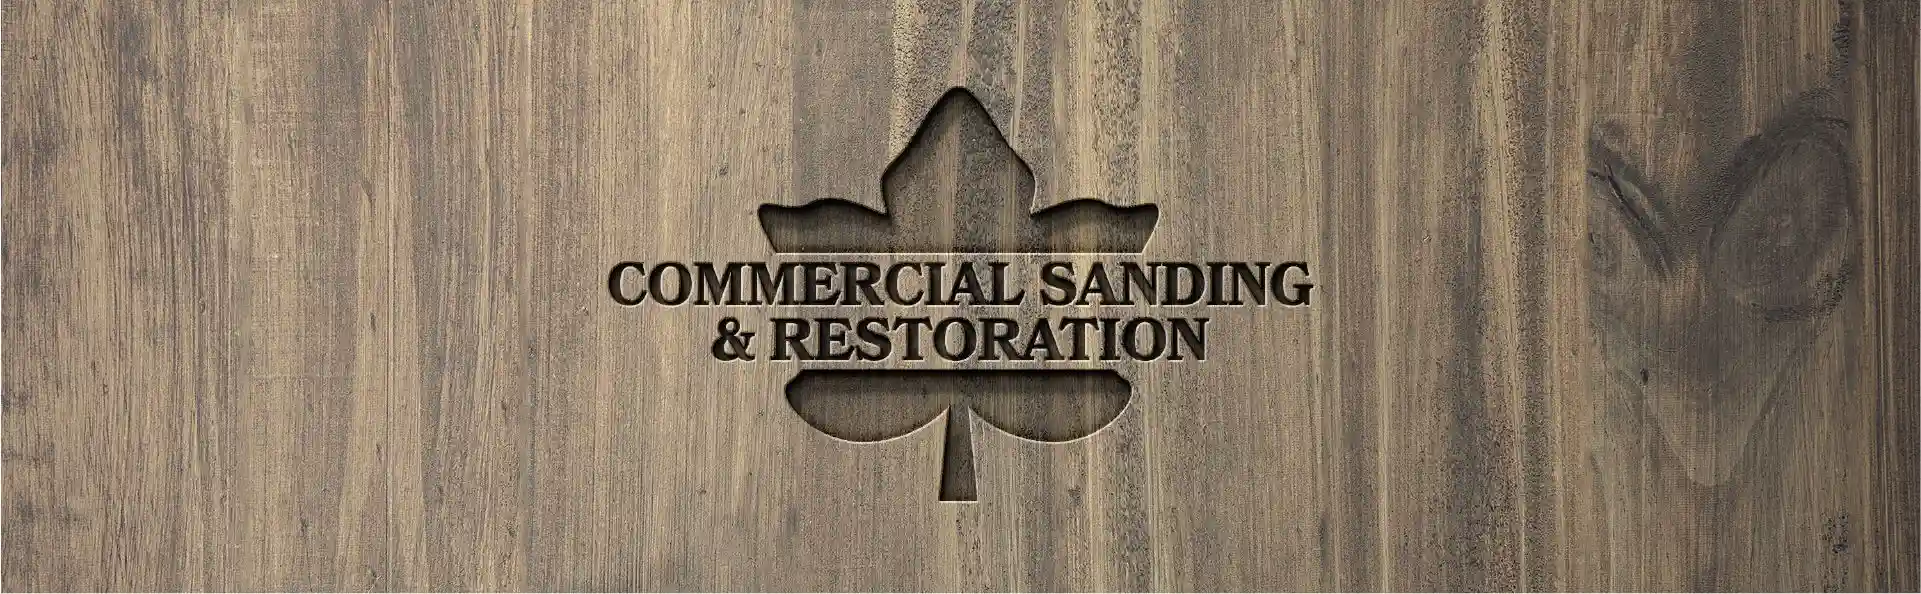 Commercial Sanding & Restoratiion